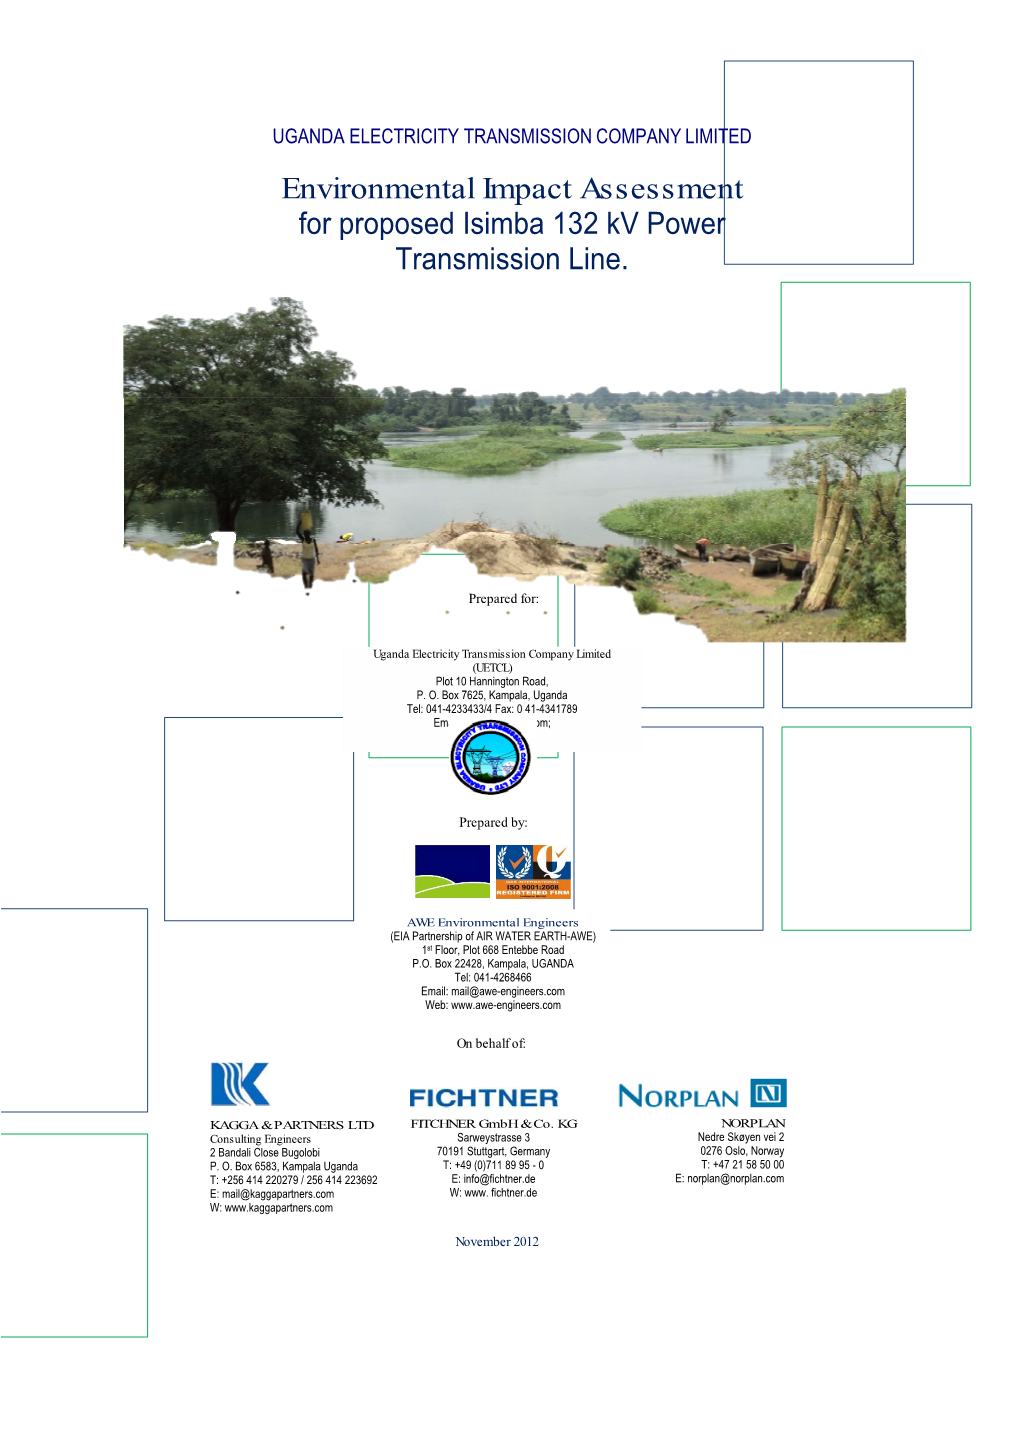 Environmental Impact Assessment for Proposed Isimba 132 Kv Power Transmission Line